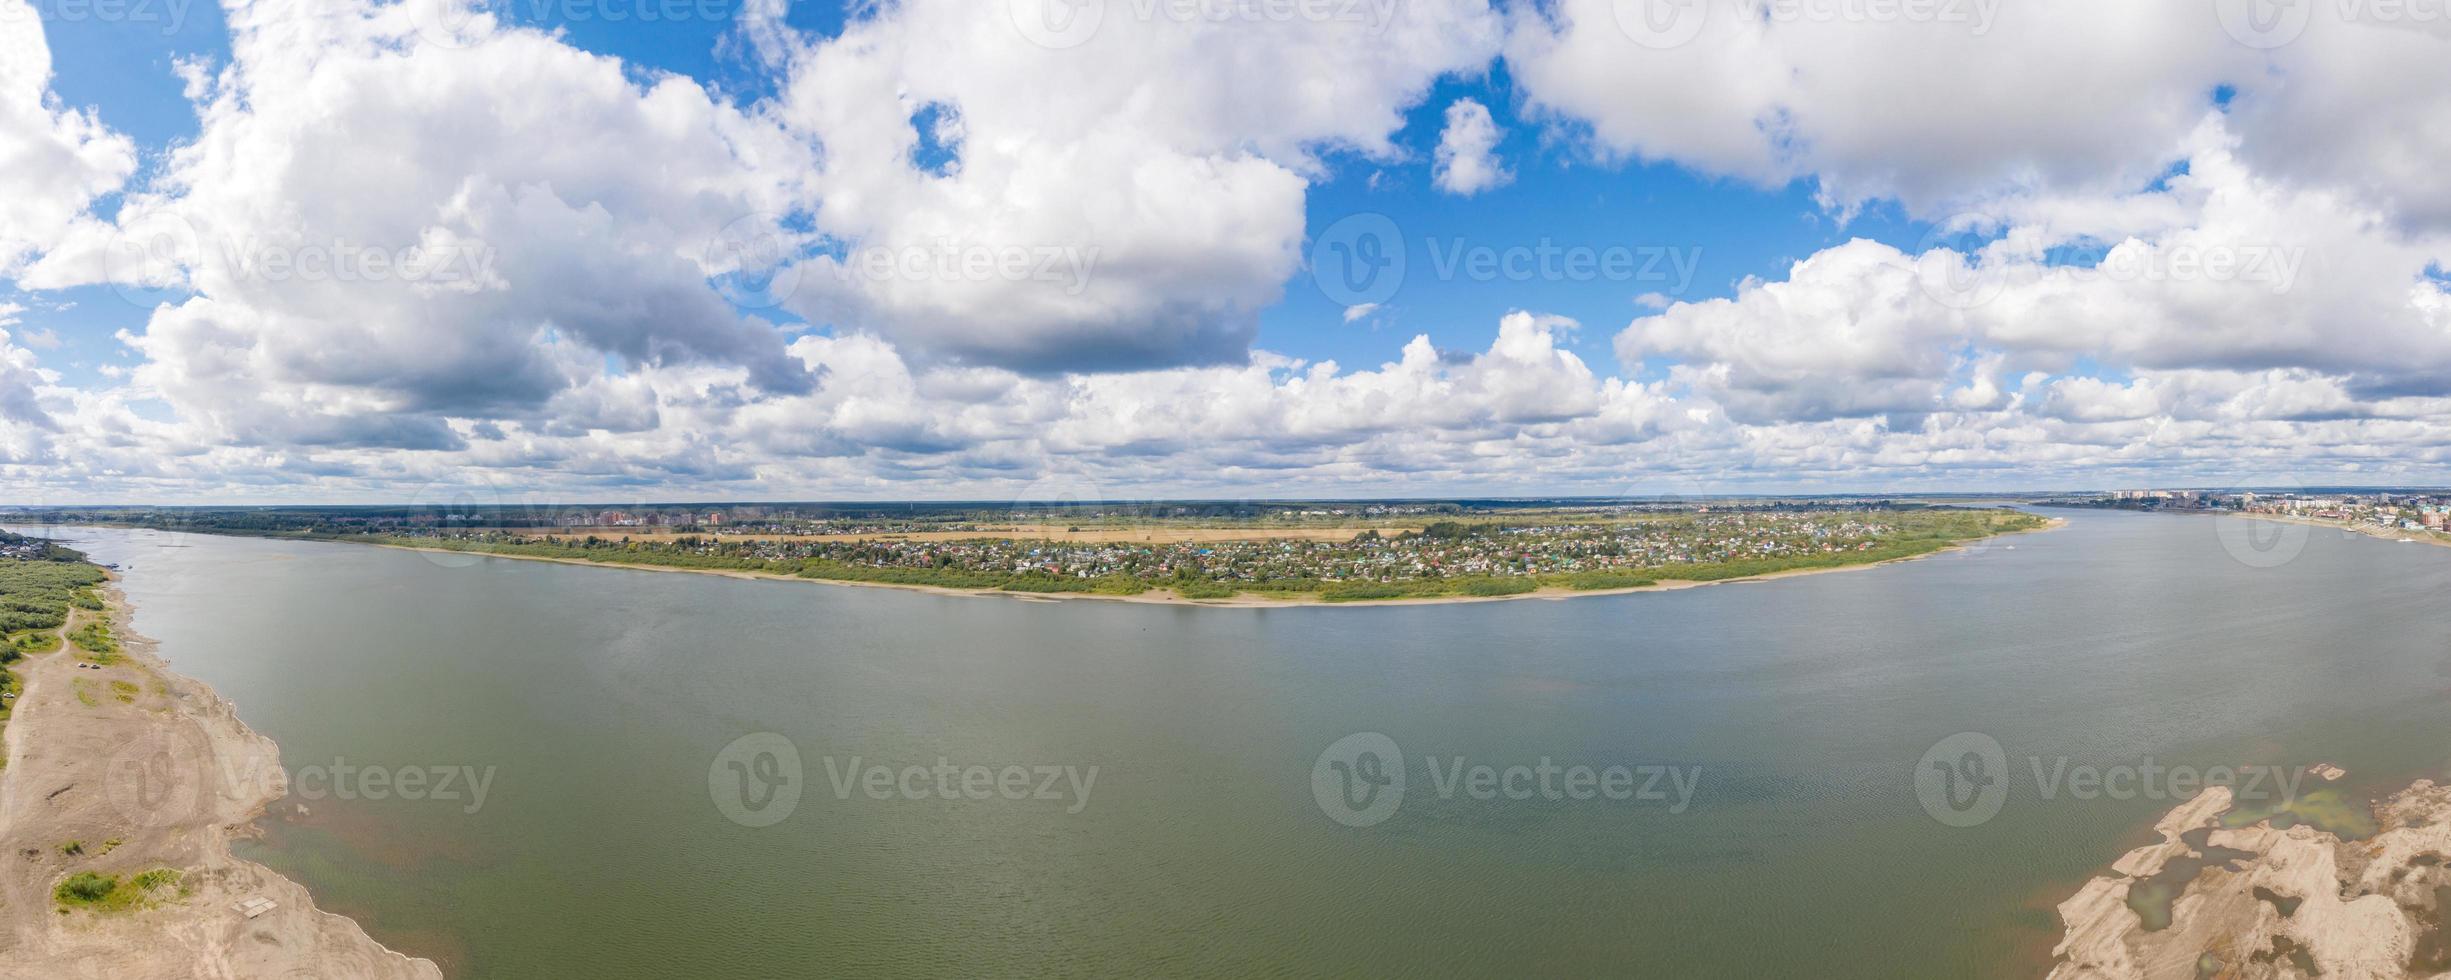 Luchtfoto van Tom River op zonnige dag, zomer in Siberië, Rusland foto